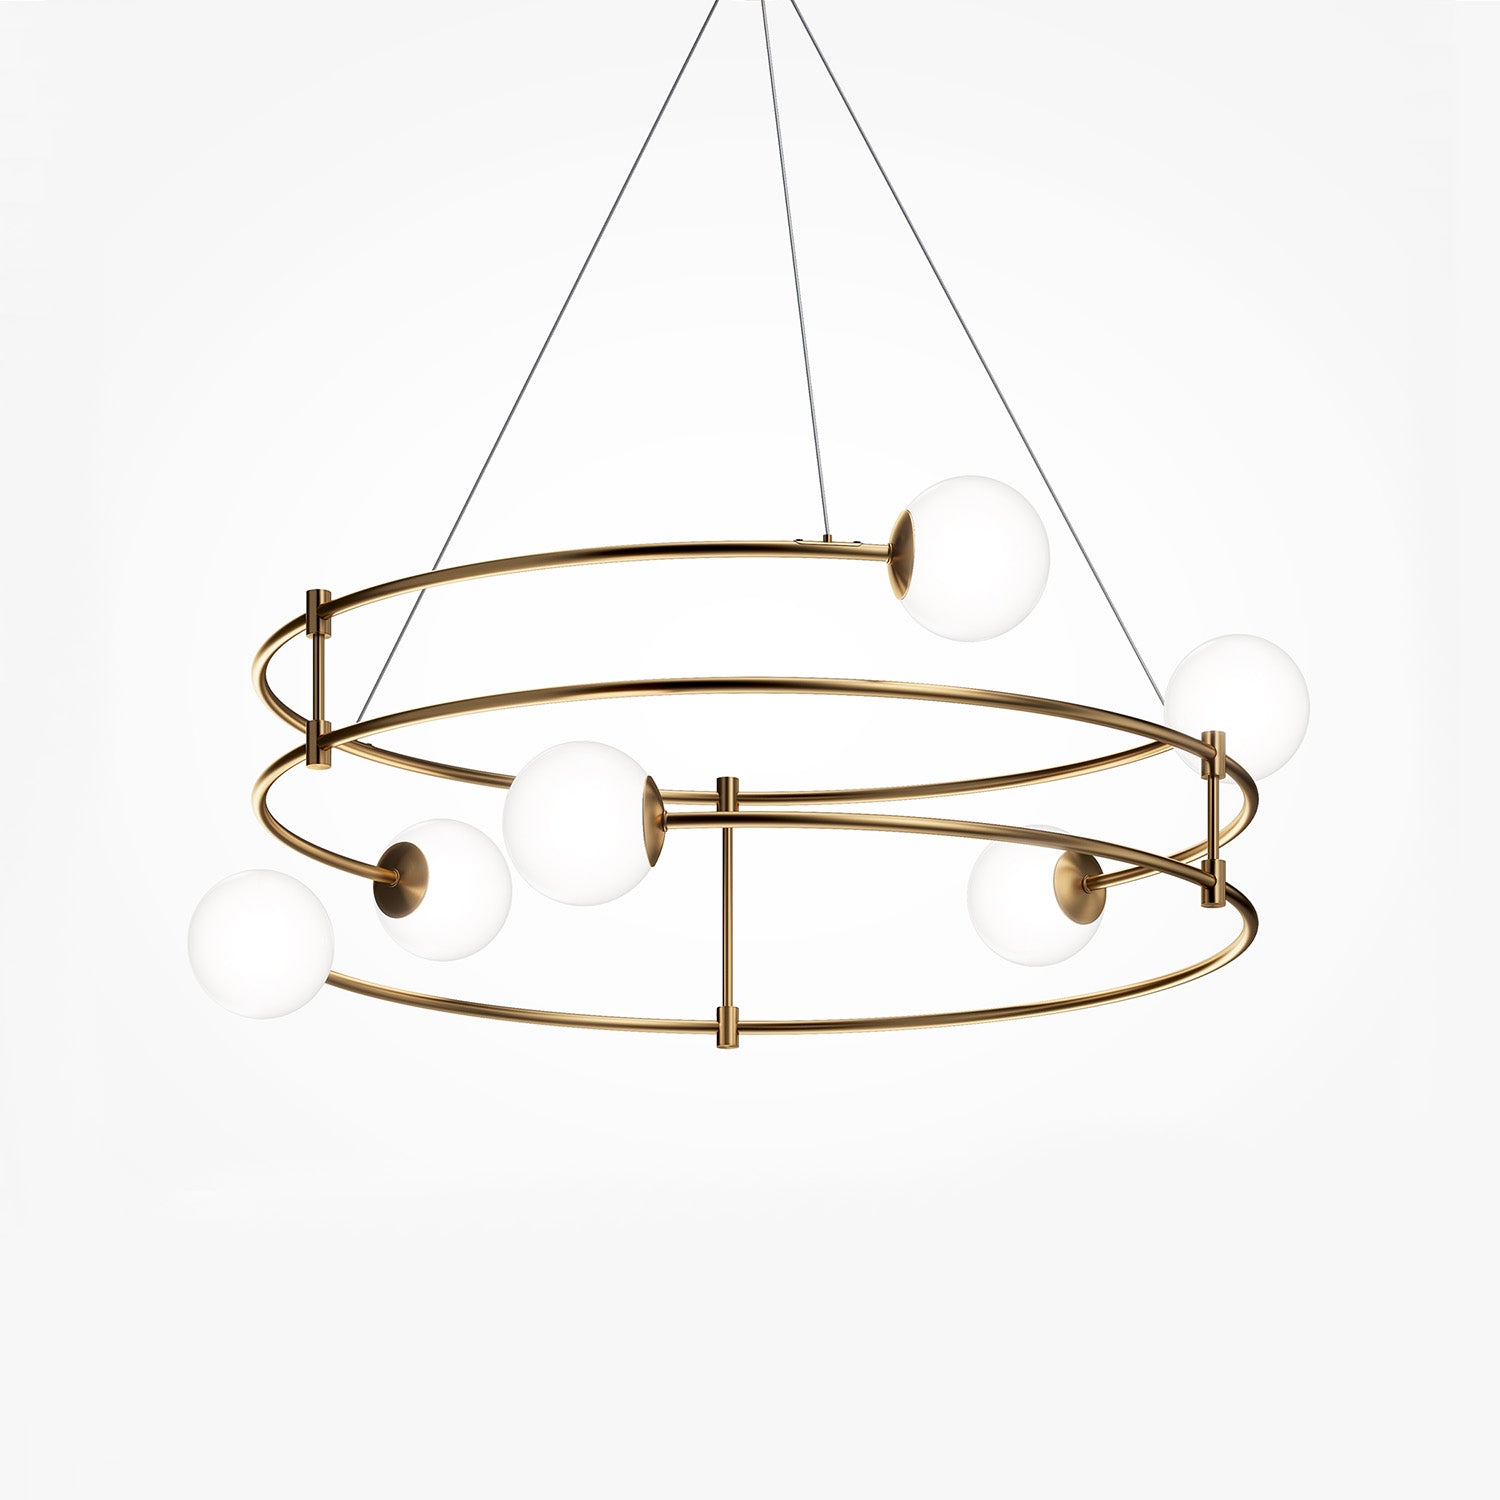 BALANCE - Golden circular chandelier with contemporary glass balls